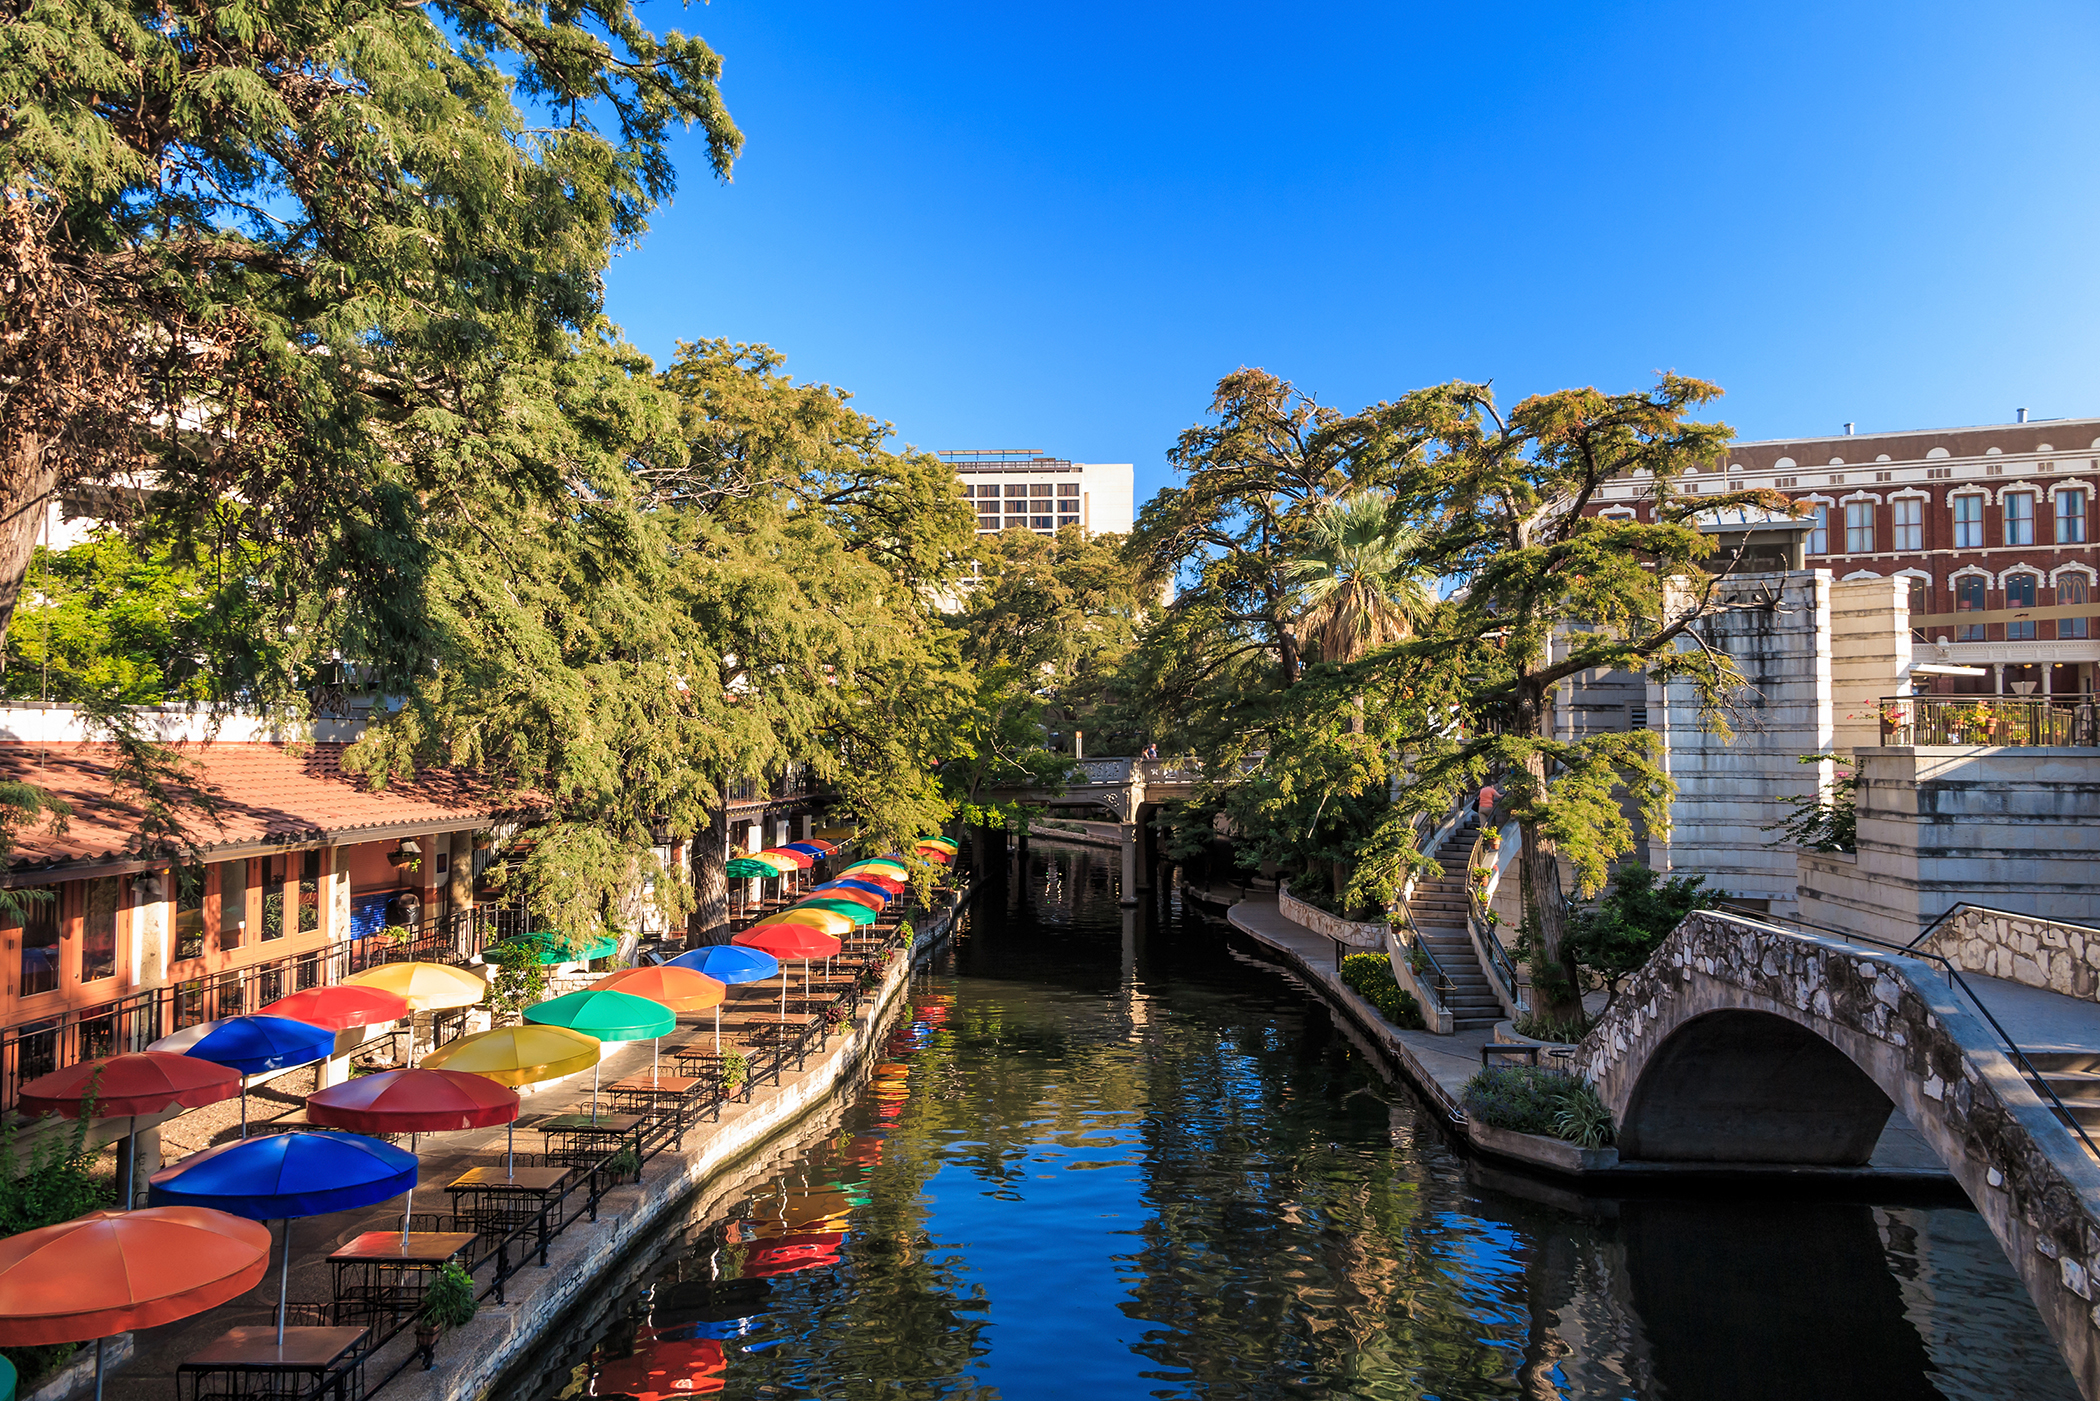 The famous Riverwalk in San Antonio, Texas.